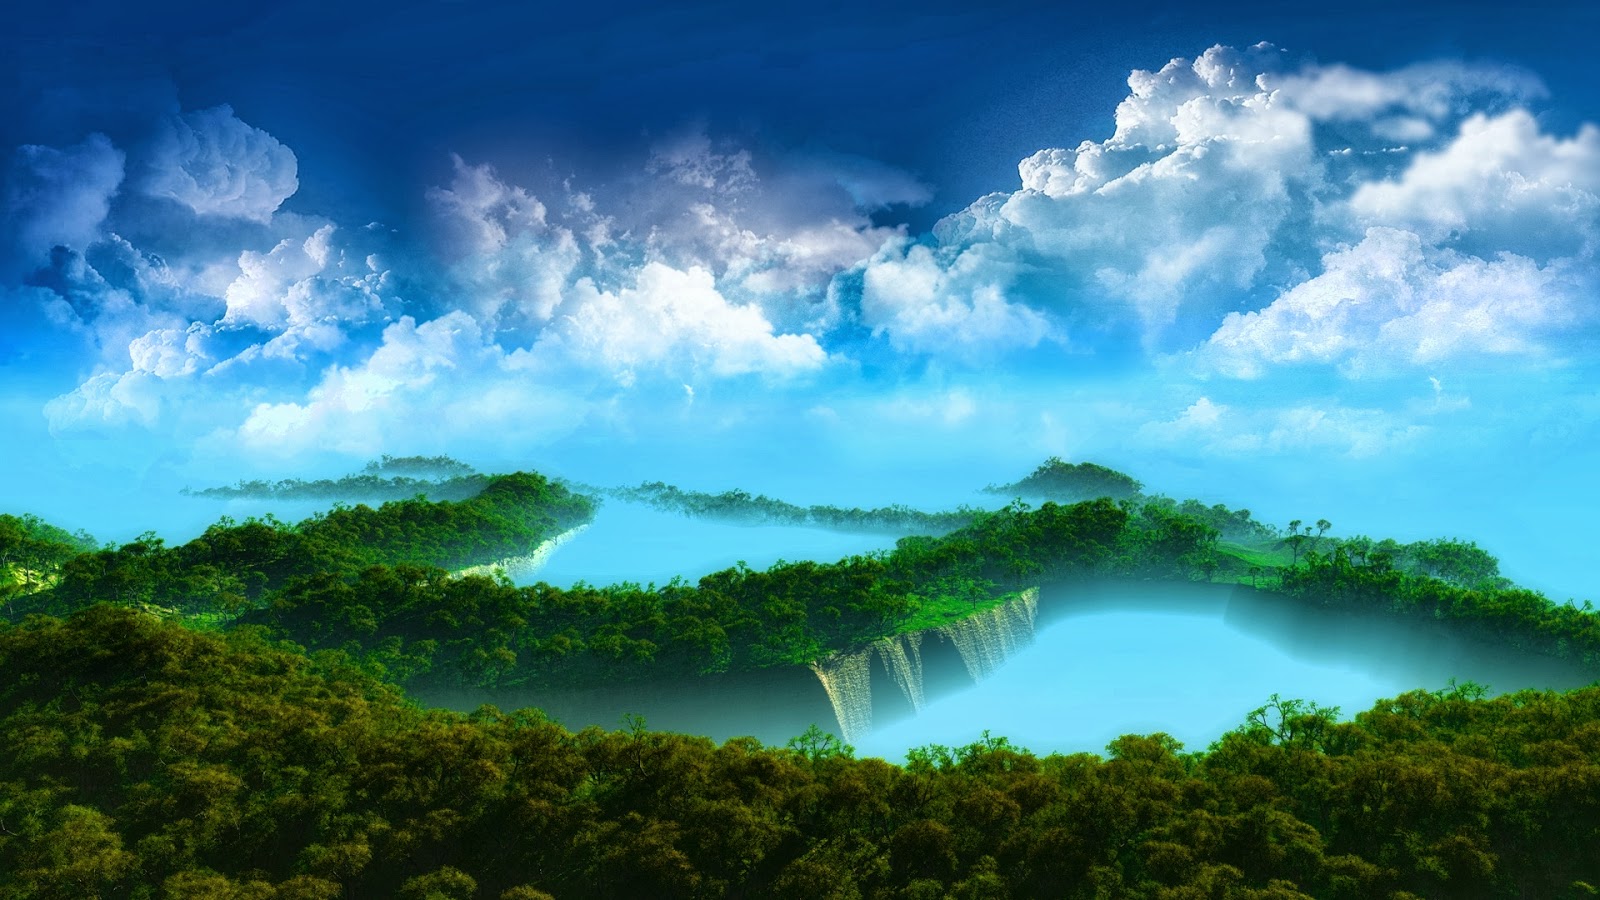 Album hình nền phong cảnh thiên nhiên tươi mát Full HD cho máy tính |  Панорамная фотография, Живописные пейзажи, Горный пейзаж